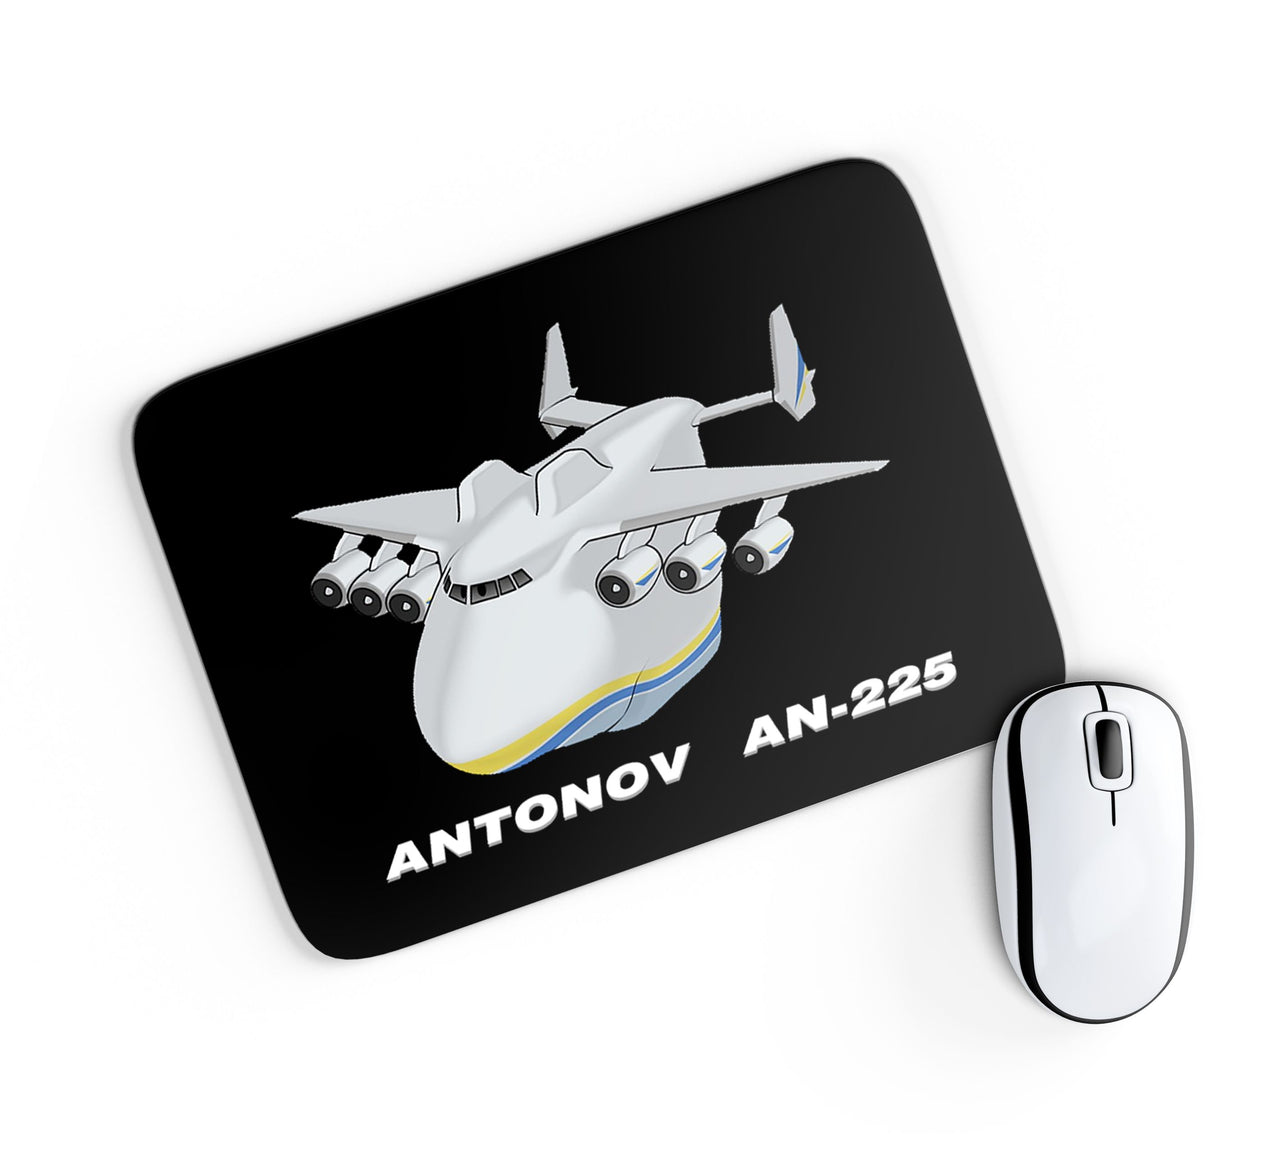 Antonov AN-225 (29) Designed Mouse Pads